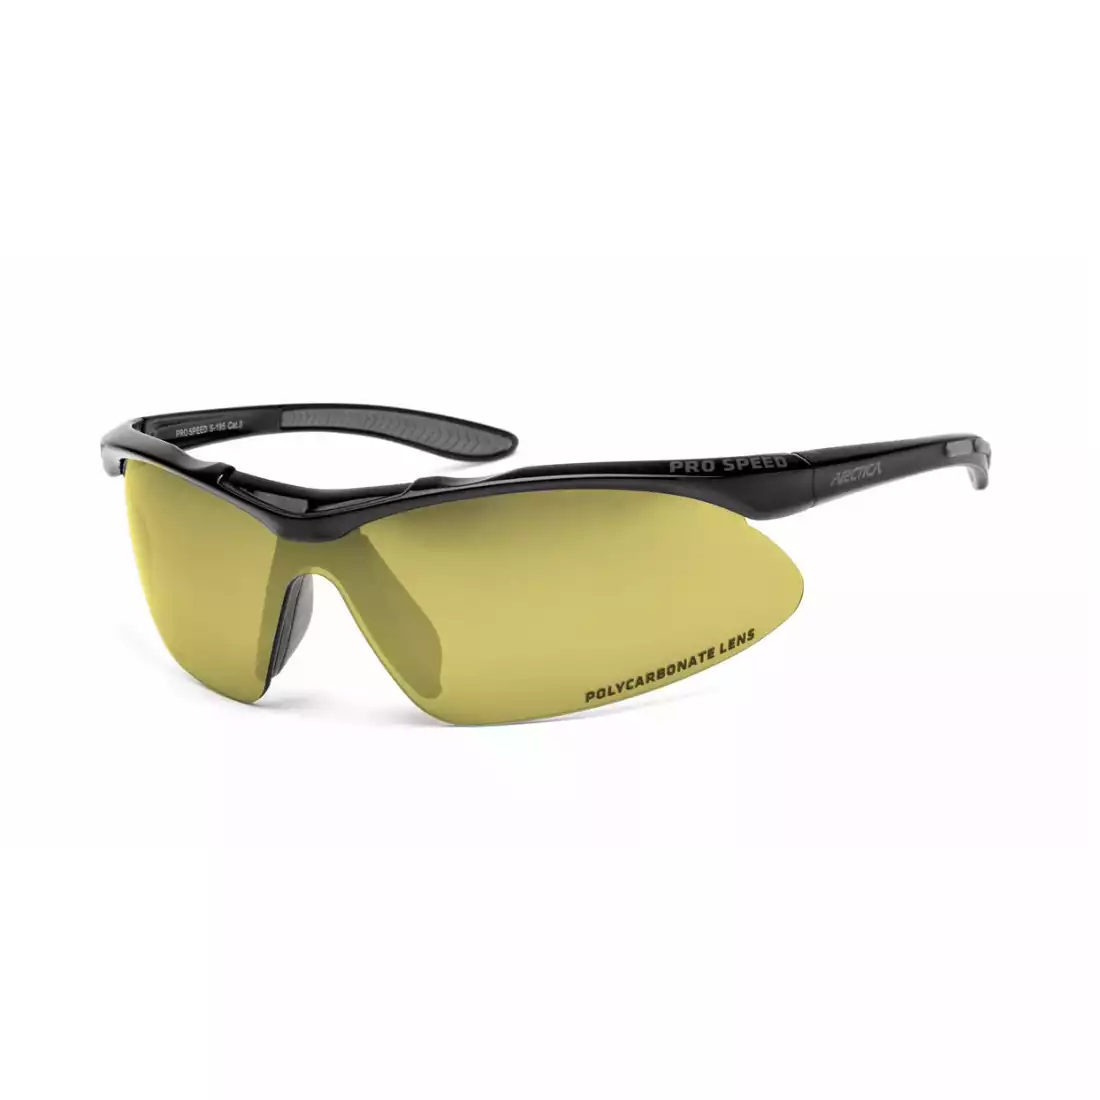 ARCTICA okulary sportowe, S 195 D